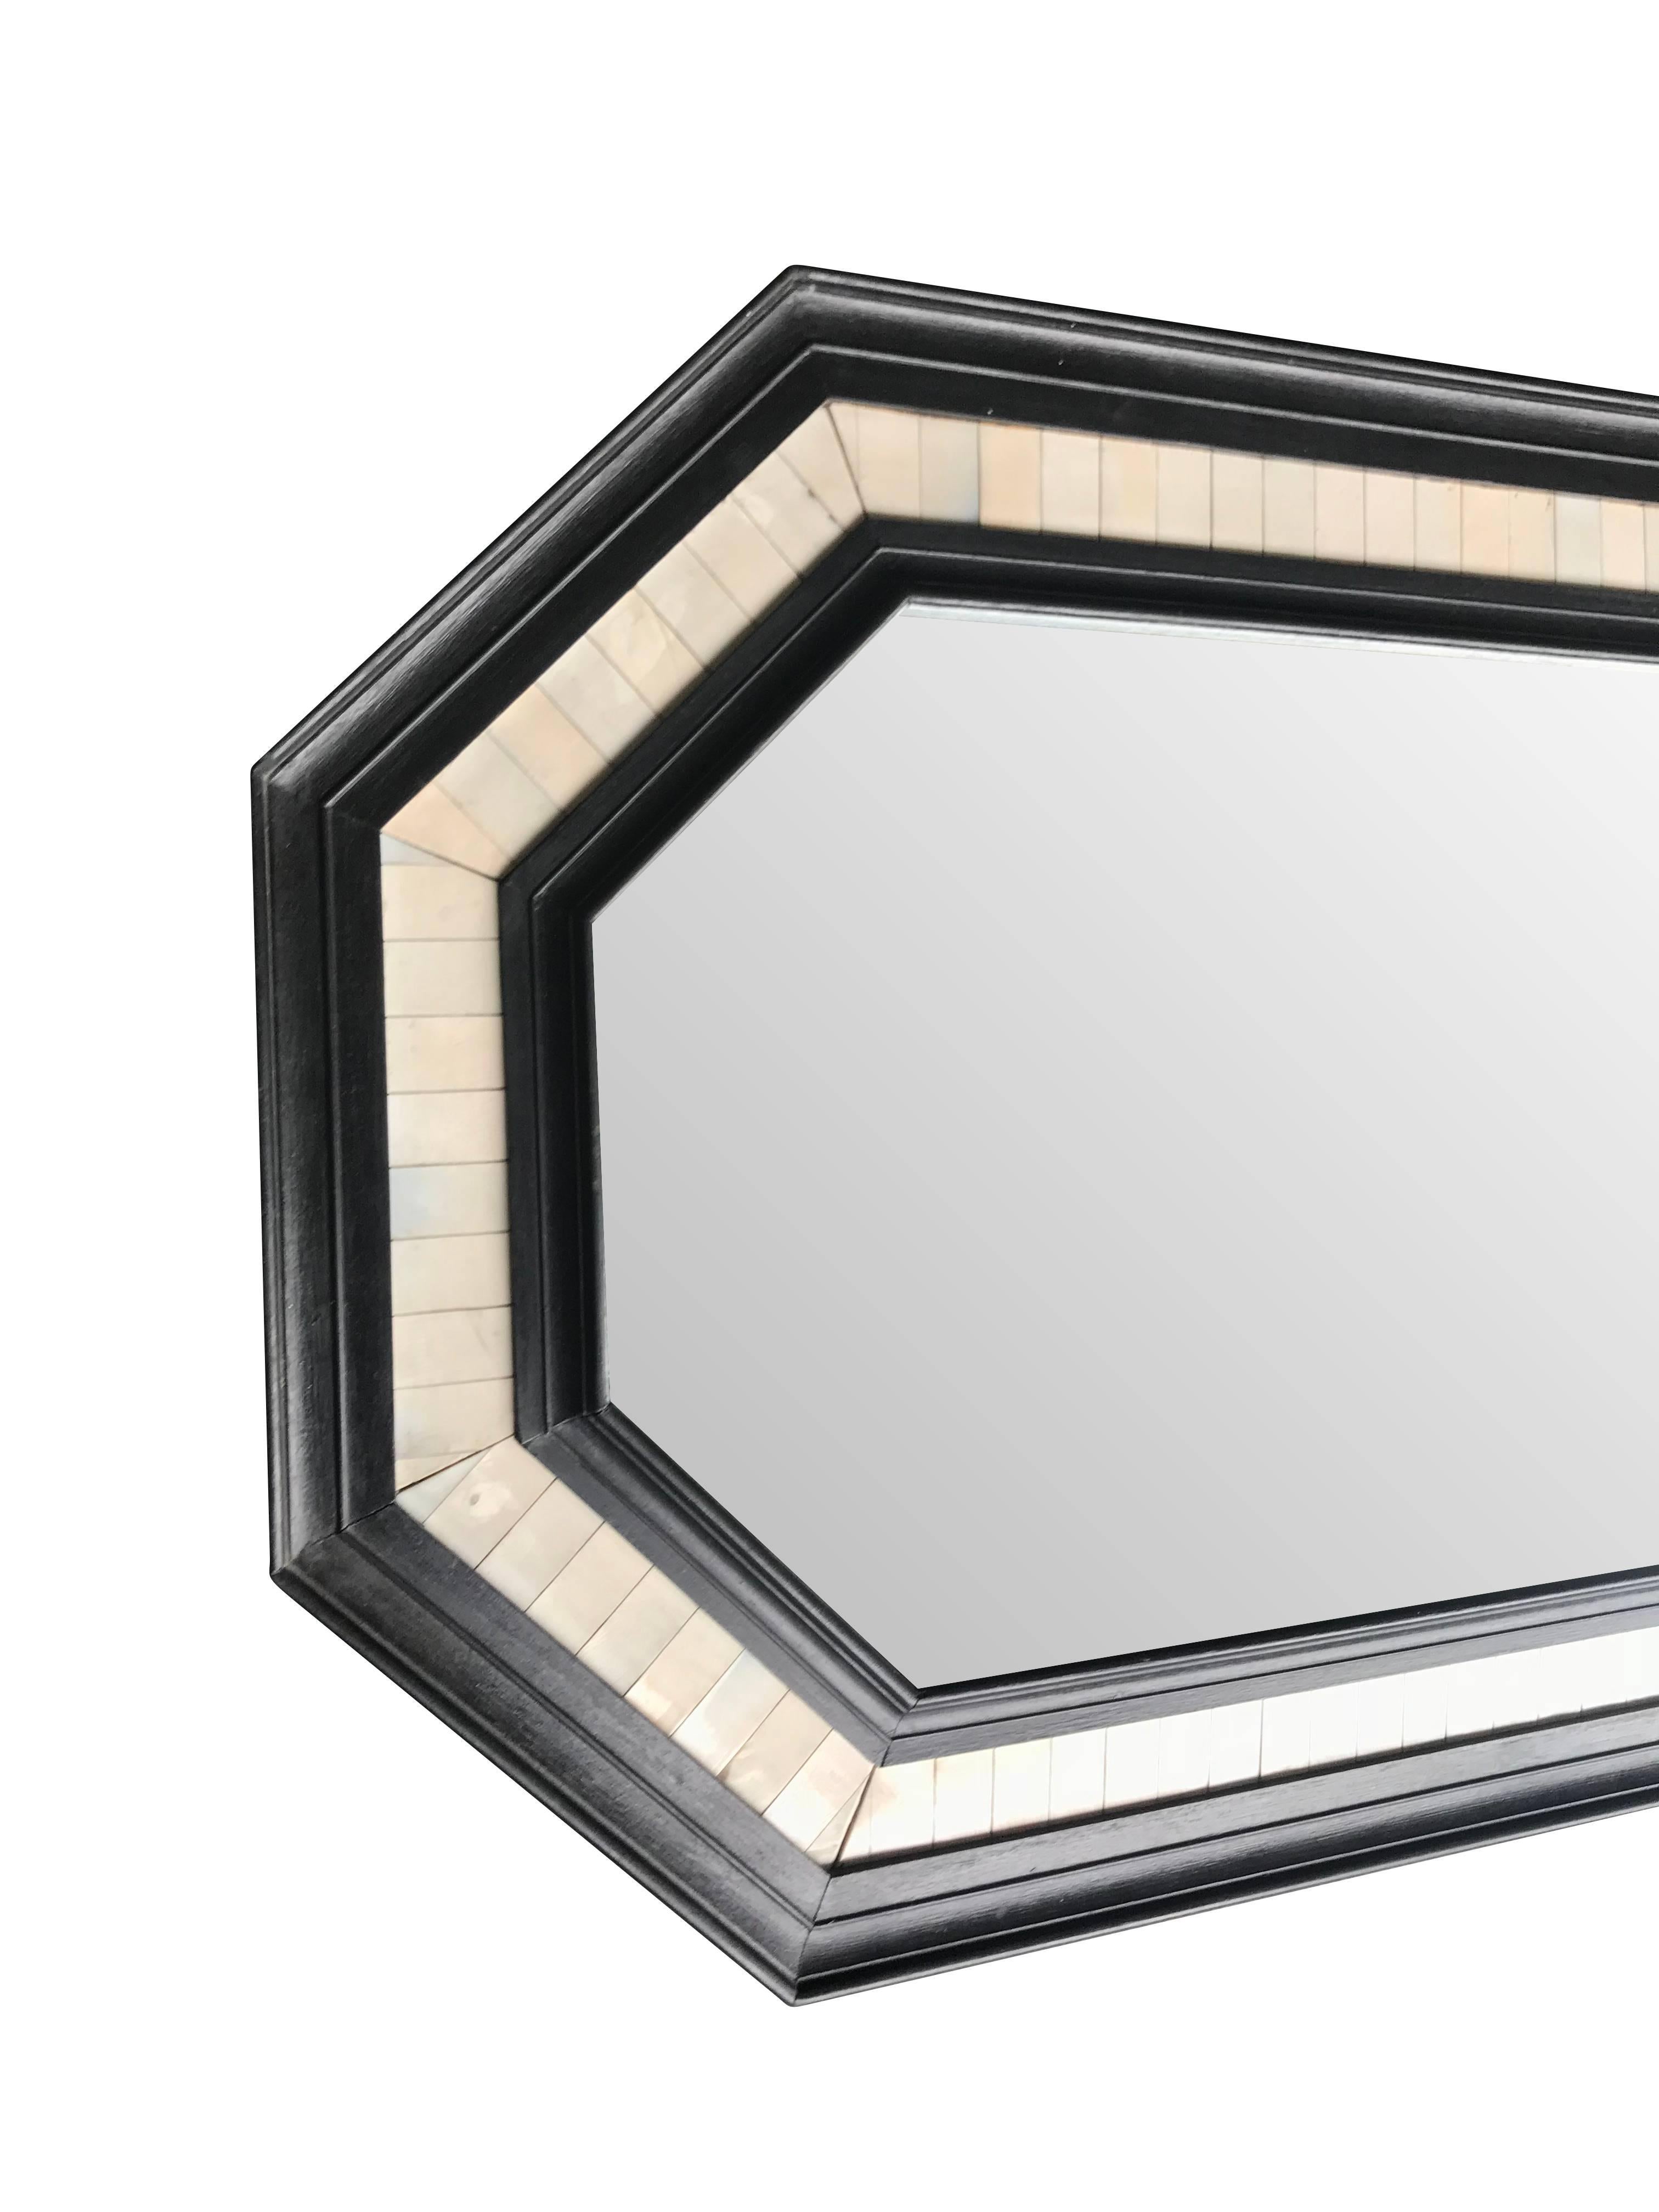 Octagonal Ebonized Wooden Framed Mirror with Bone Inlay Surround 4